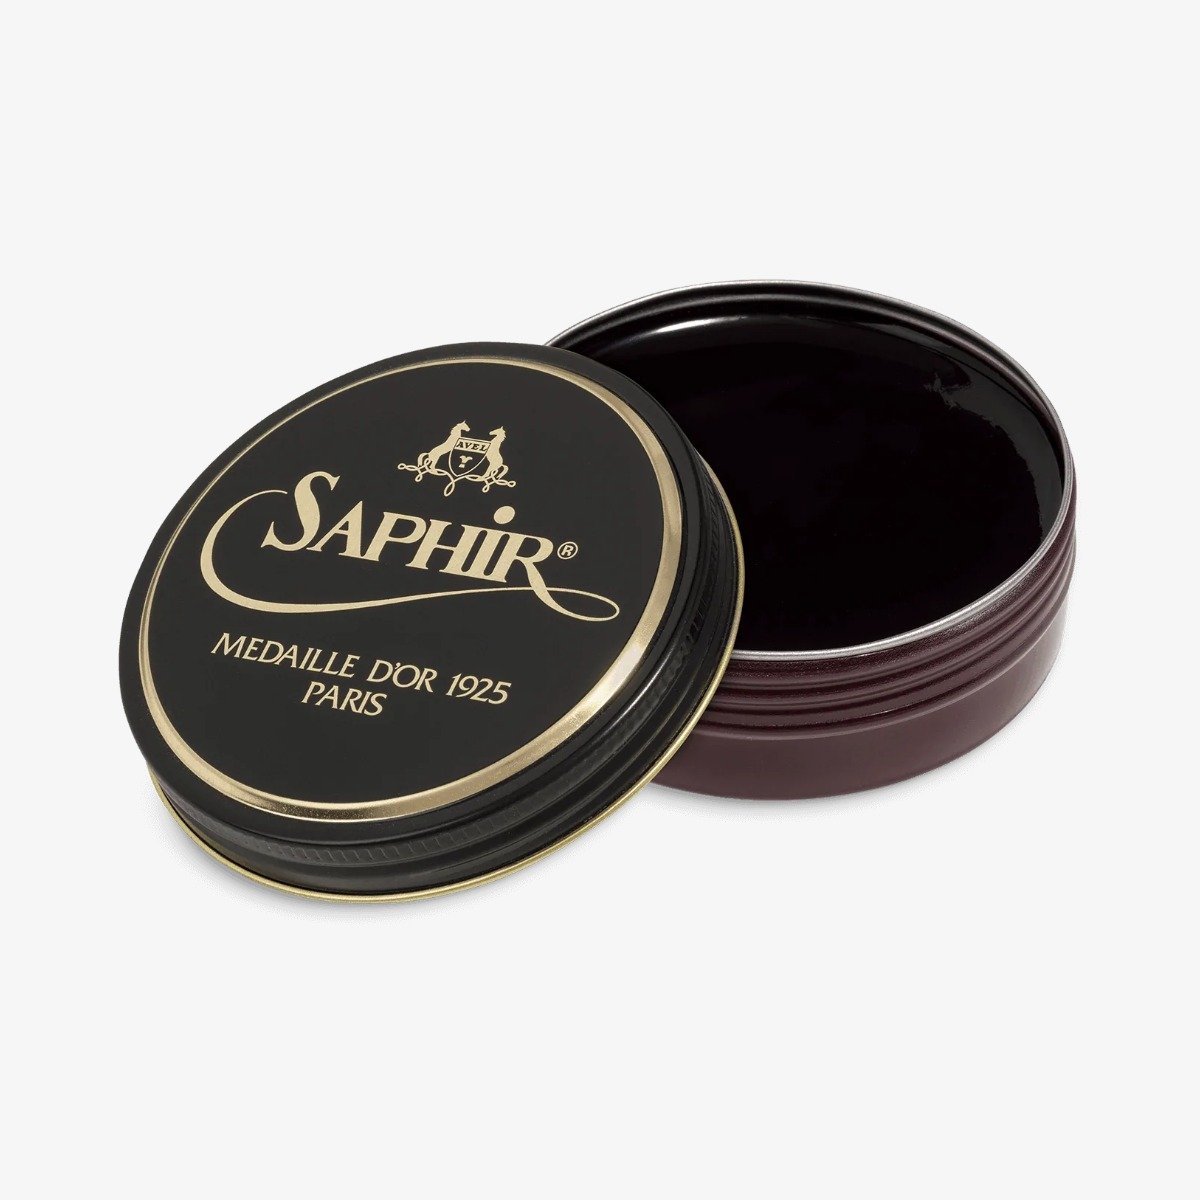 Saphir Pate de Luxe burgundy wax polish